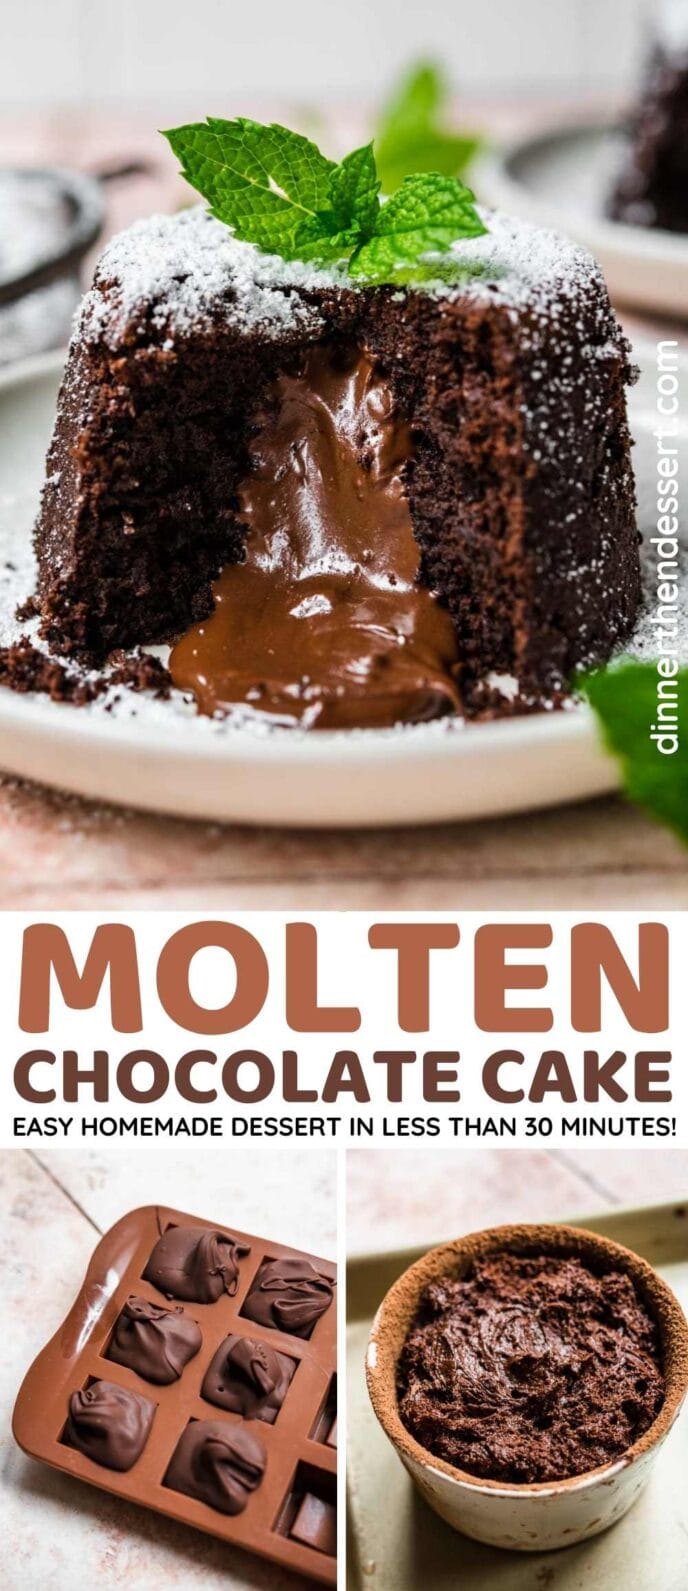 Molten Chocolate Cake collage